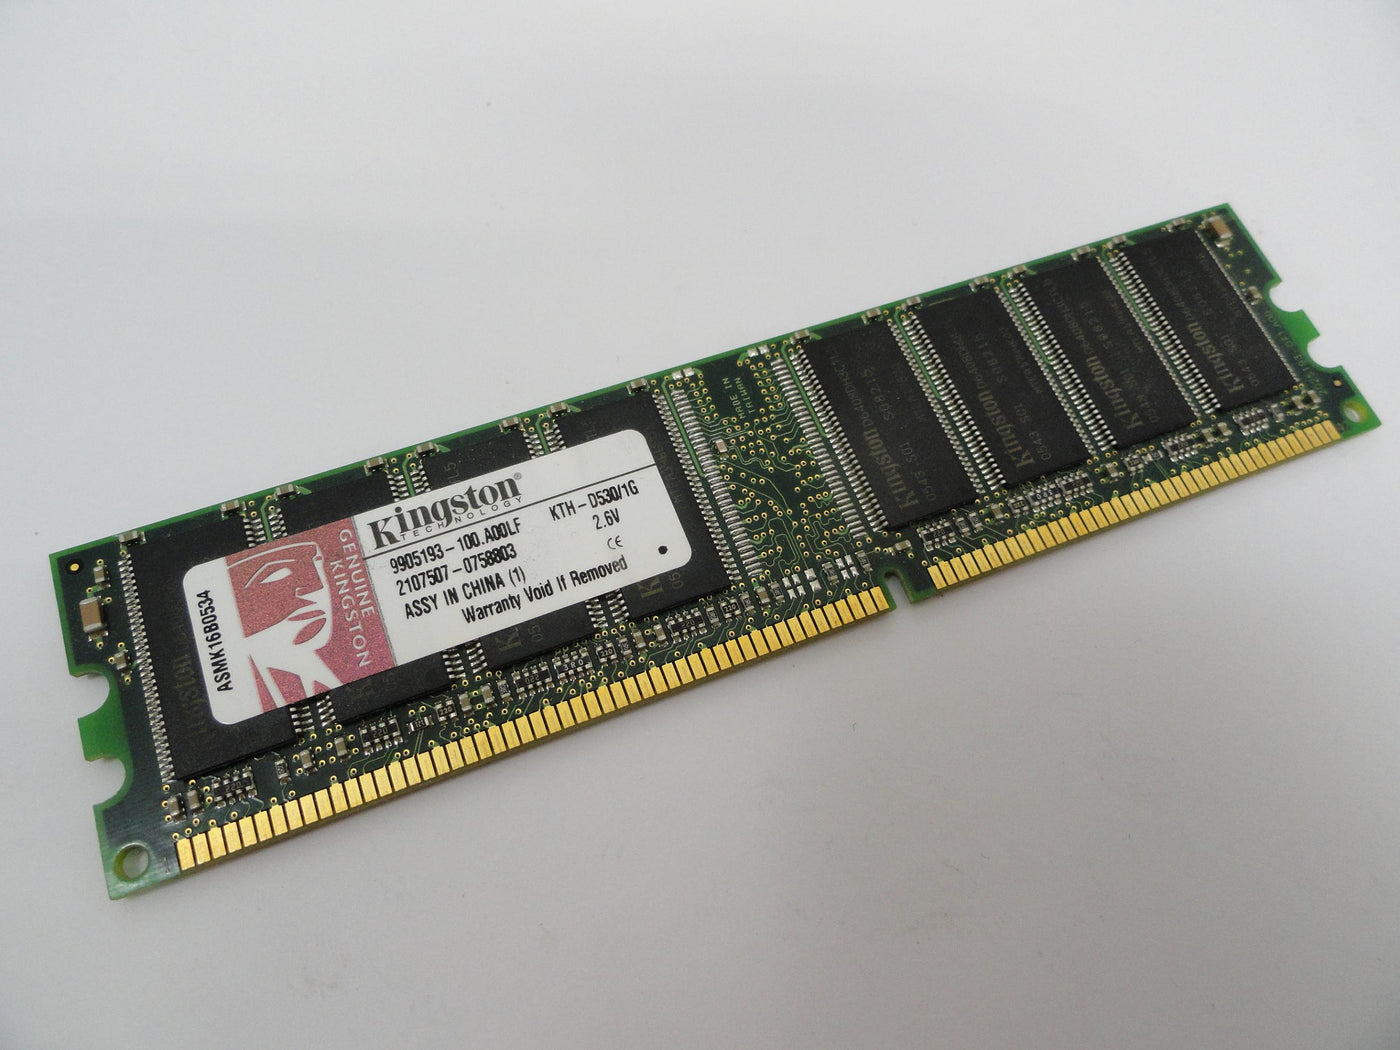 PR16369_KTH-D530/1G_Kingston 1Gb DDR PC-3200 184-Pin DIMM RAM Module - Image2